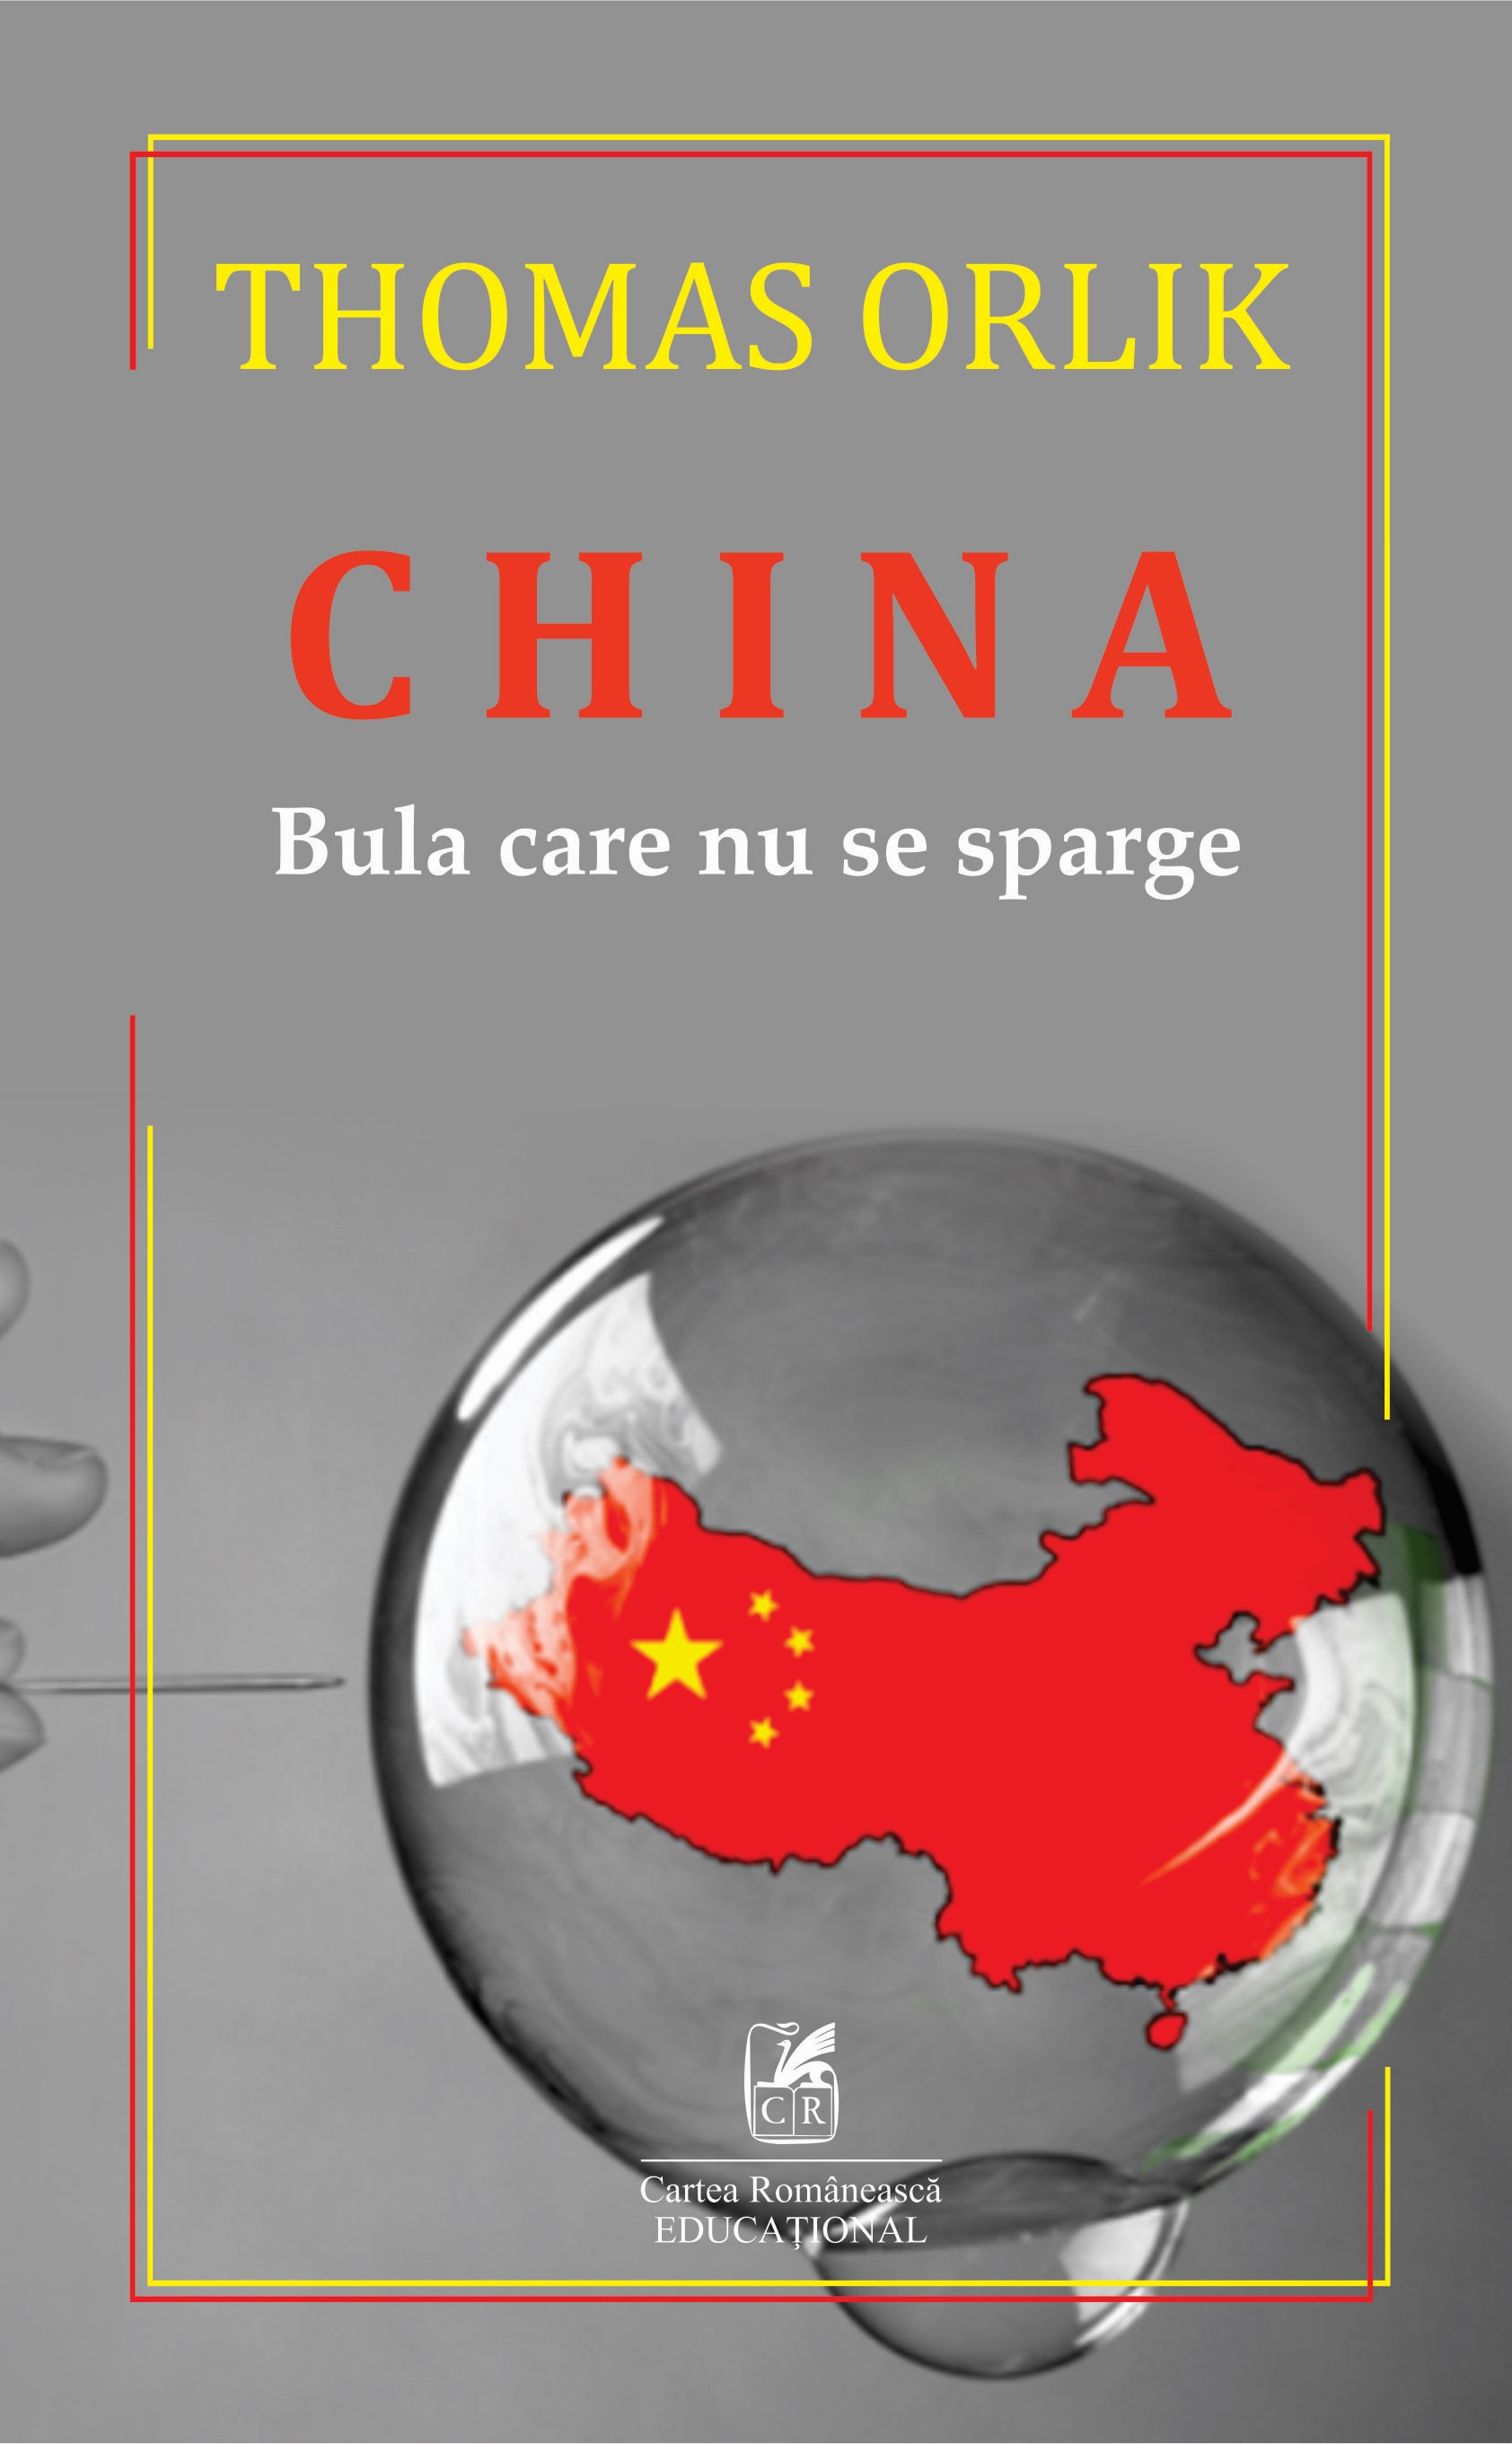 PDF China | Thomas Orlik Cartea Romaneasca educational Carte